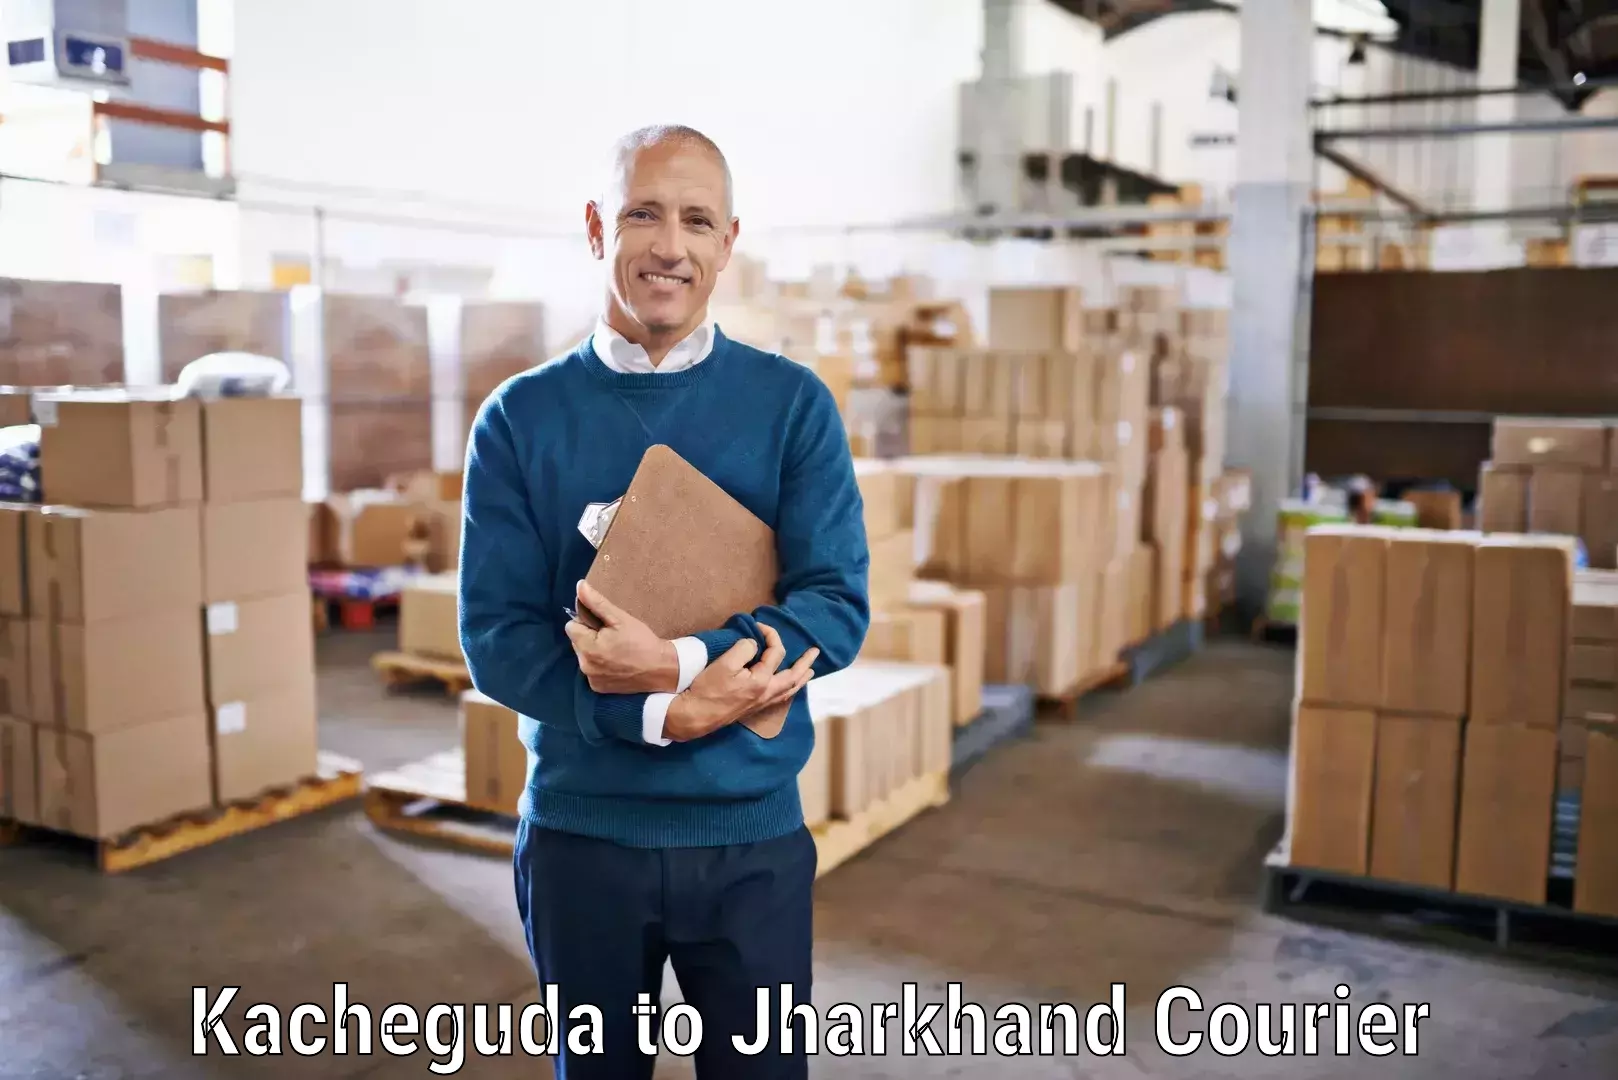 Courier service innovation Kacheguda to Ranchi